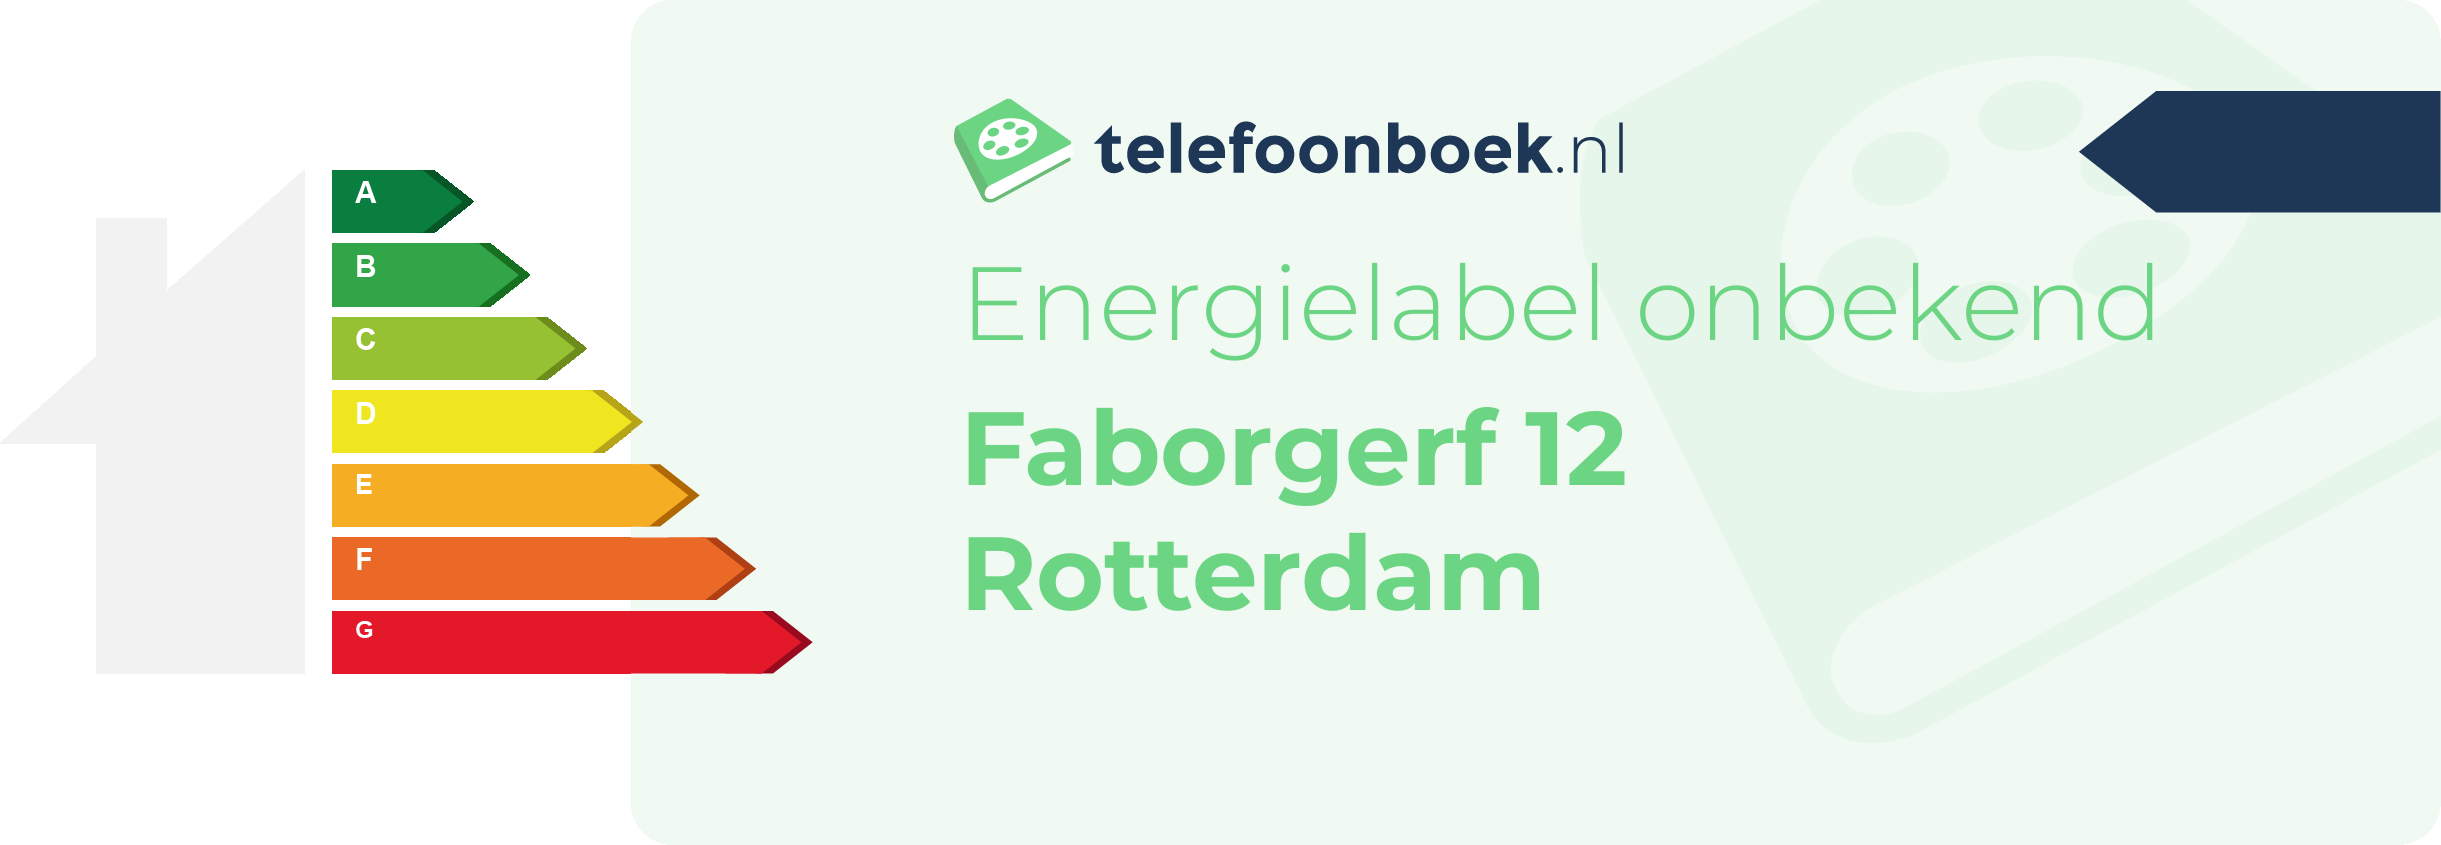 Energielabel Faborgerf 12 Rotterdam